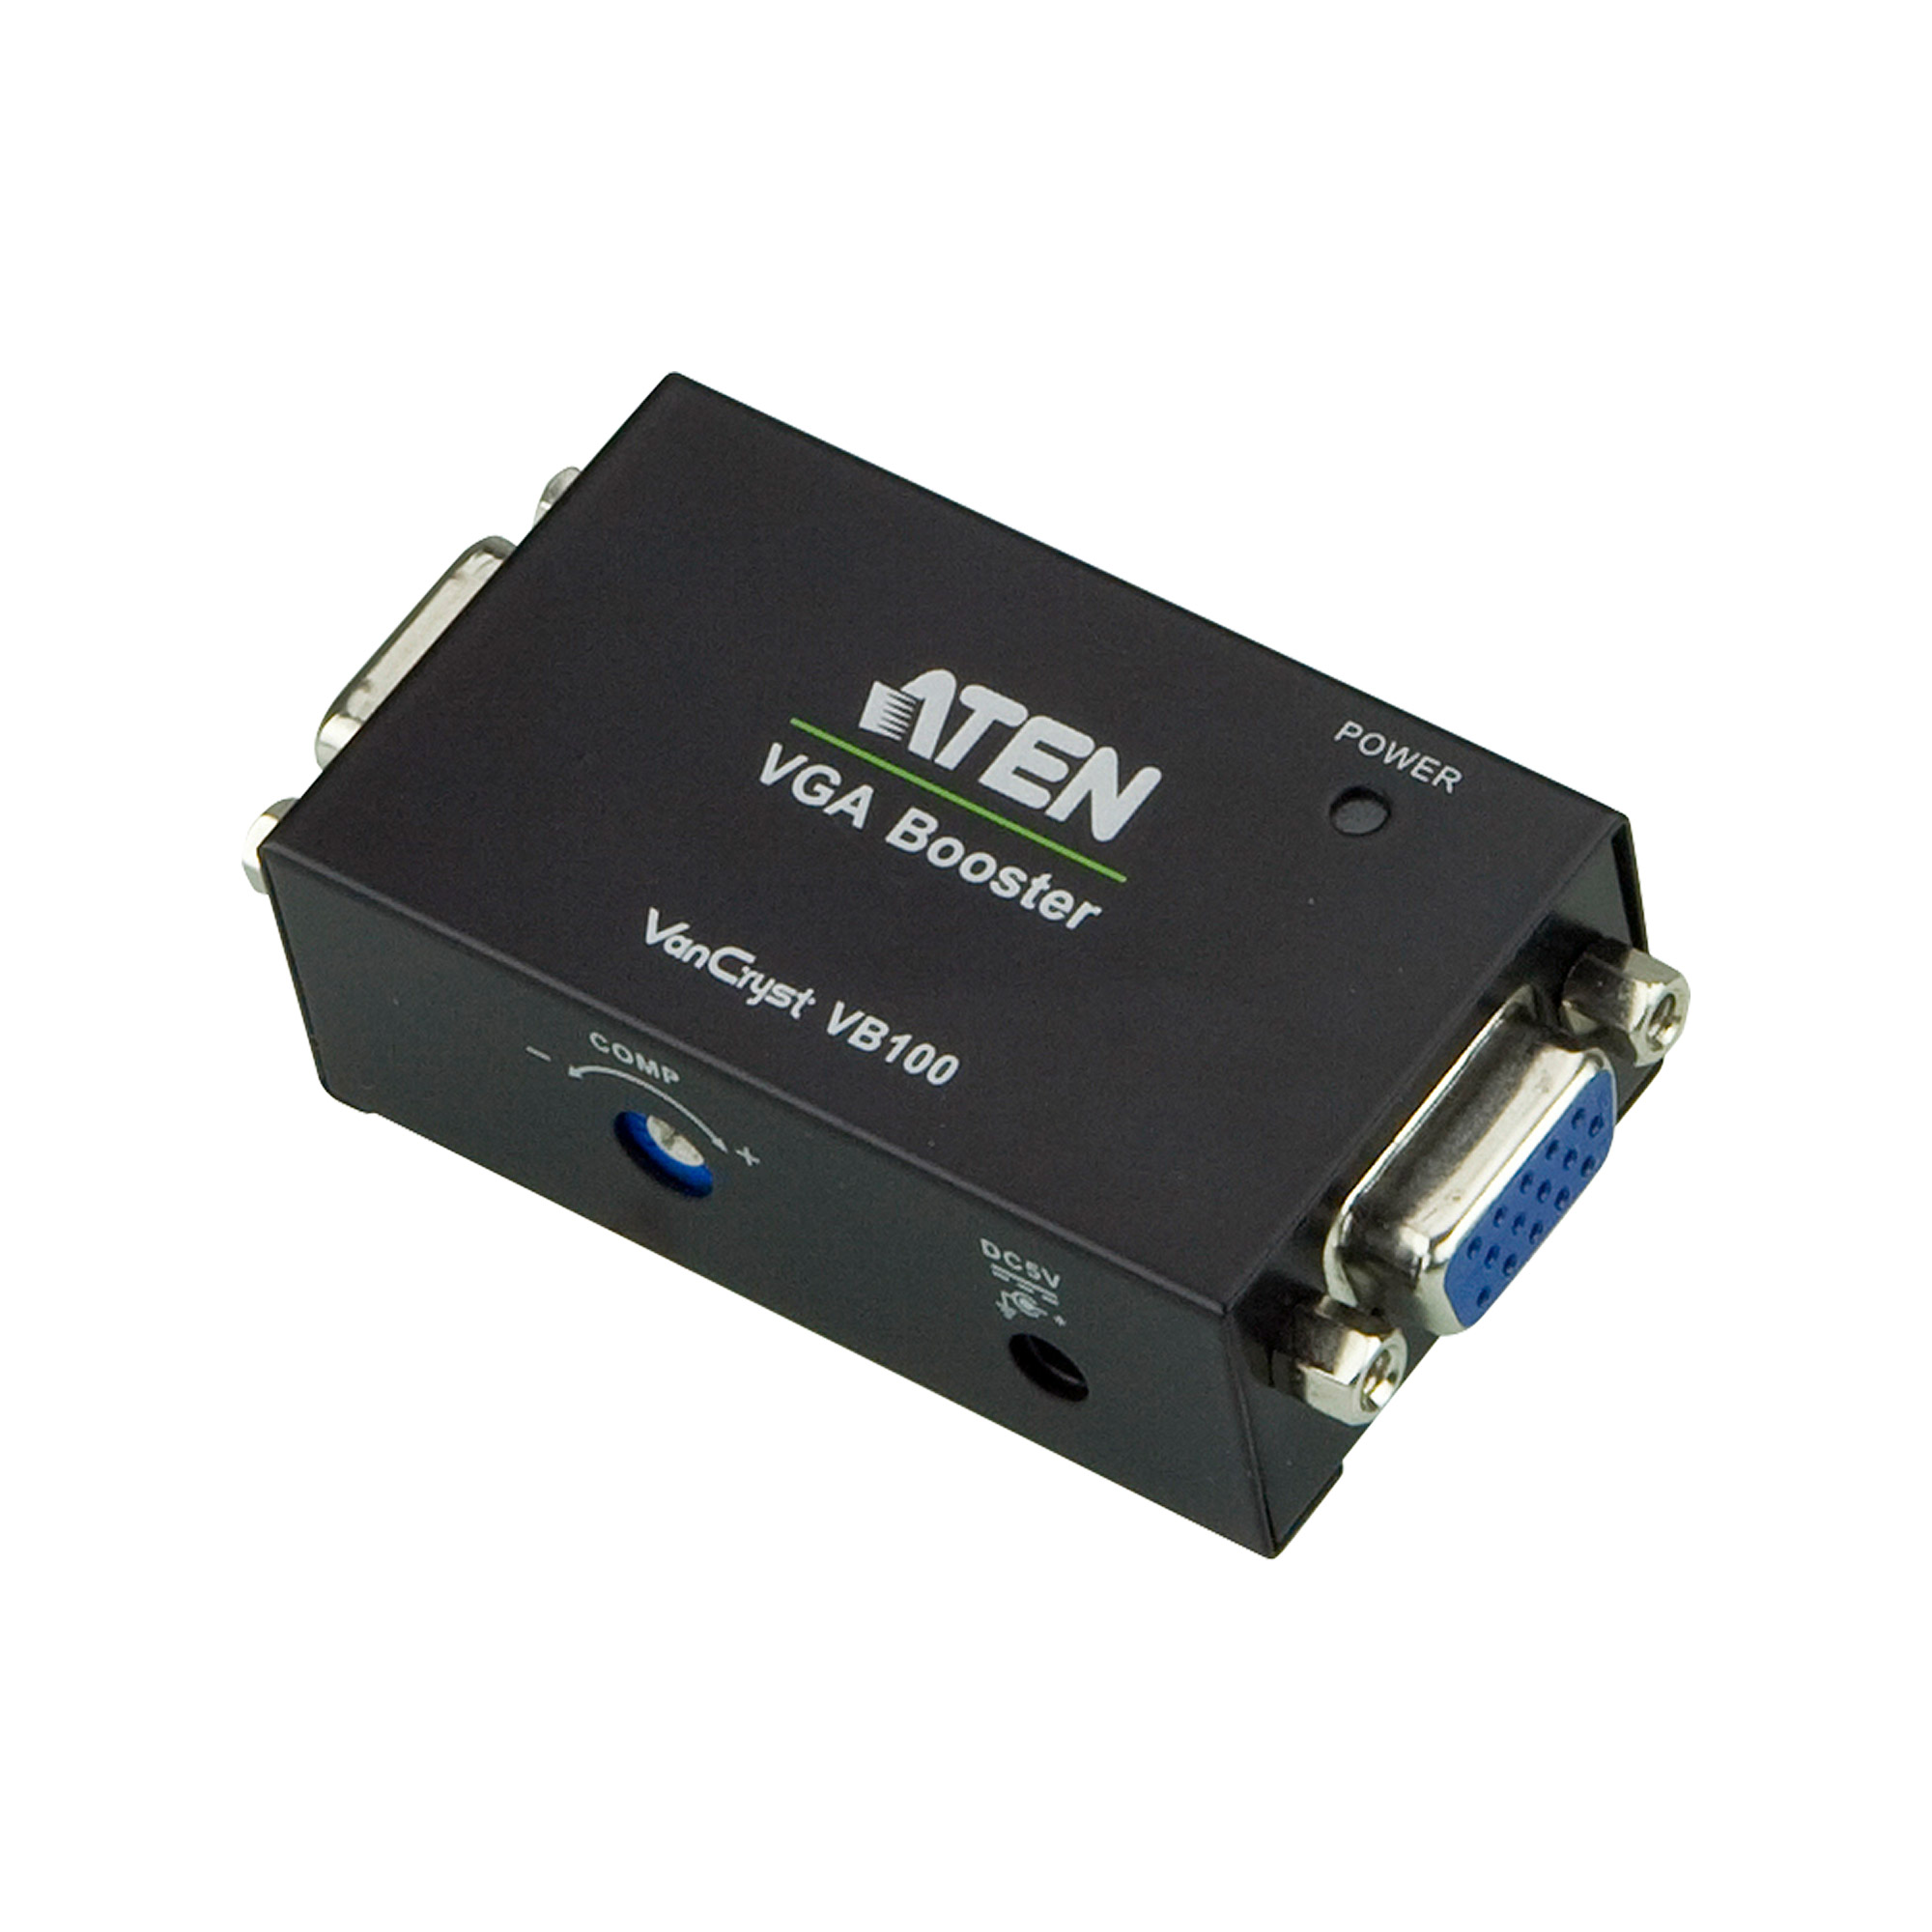 ATEN VB100 Video-Booster, VGA-Verstärker mit LED-Anzeige